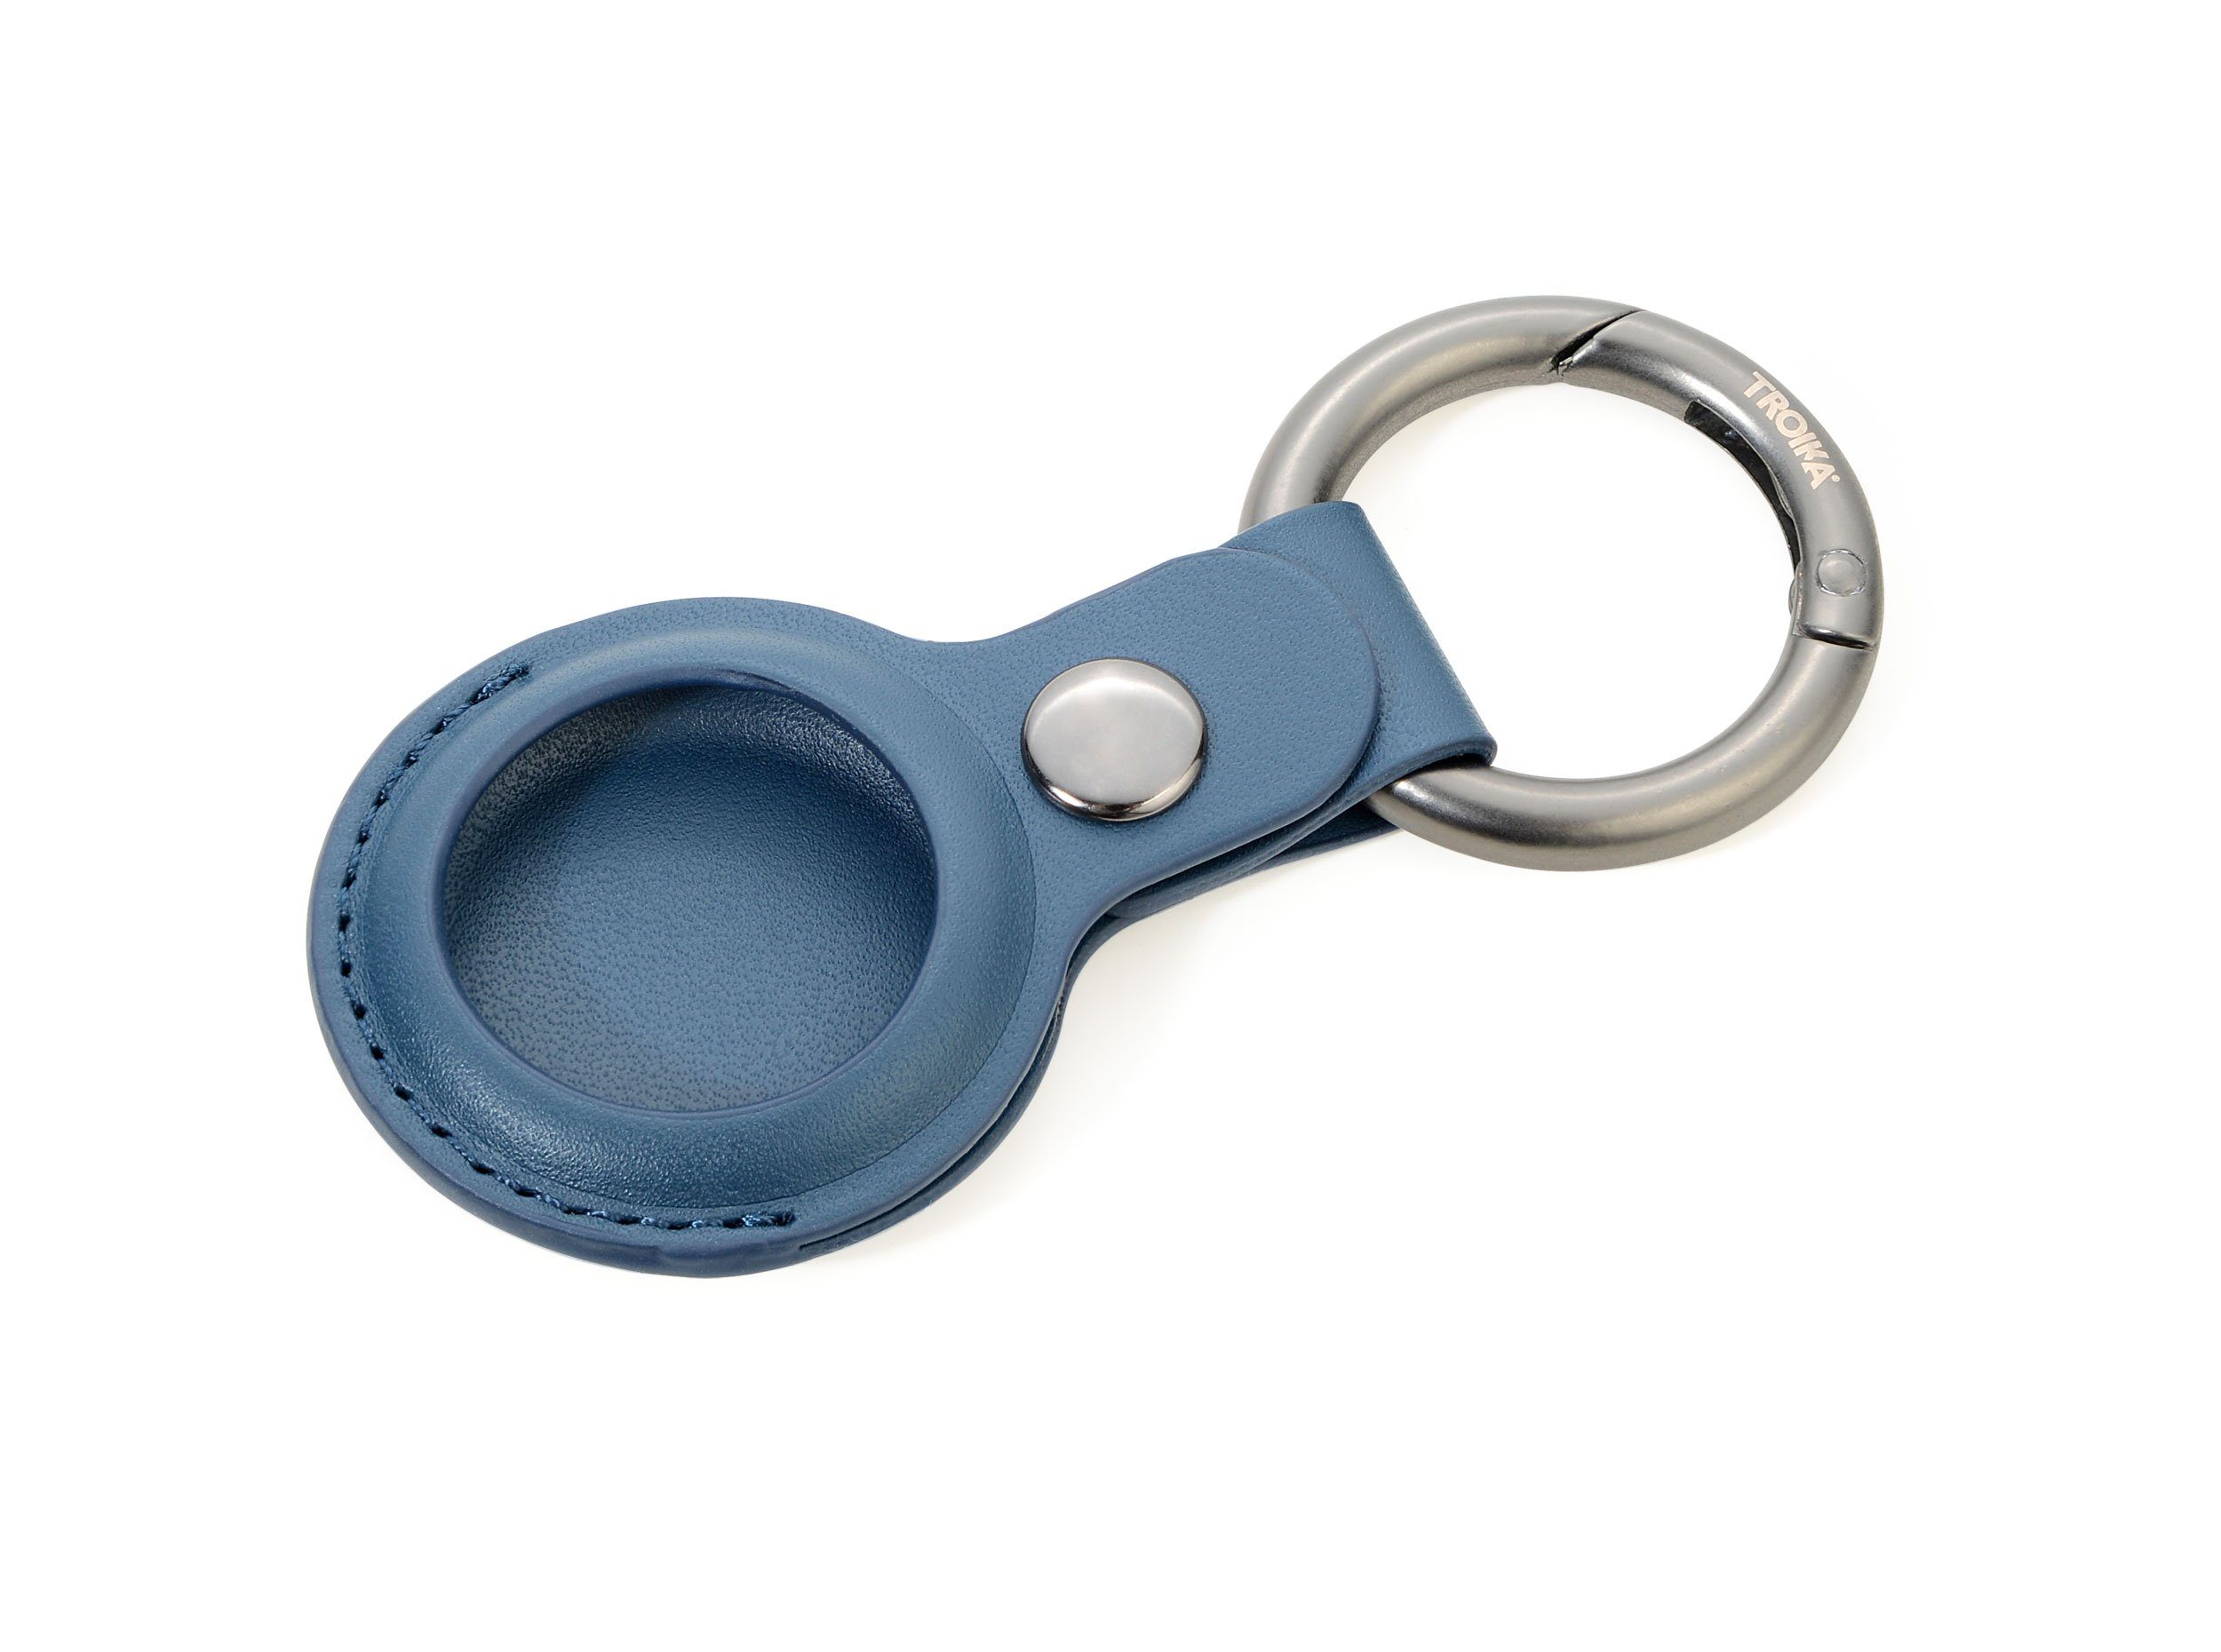 PANTONE Design- Schlüsselband Adjustable Lanyard, verstellbar, CoY 2020 -  Classic Blue 19-4052